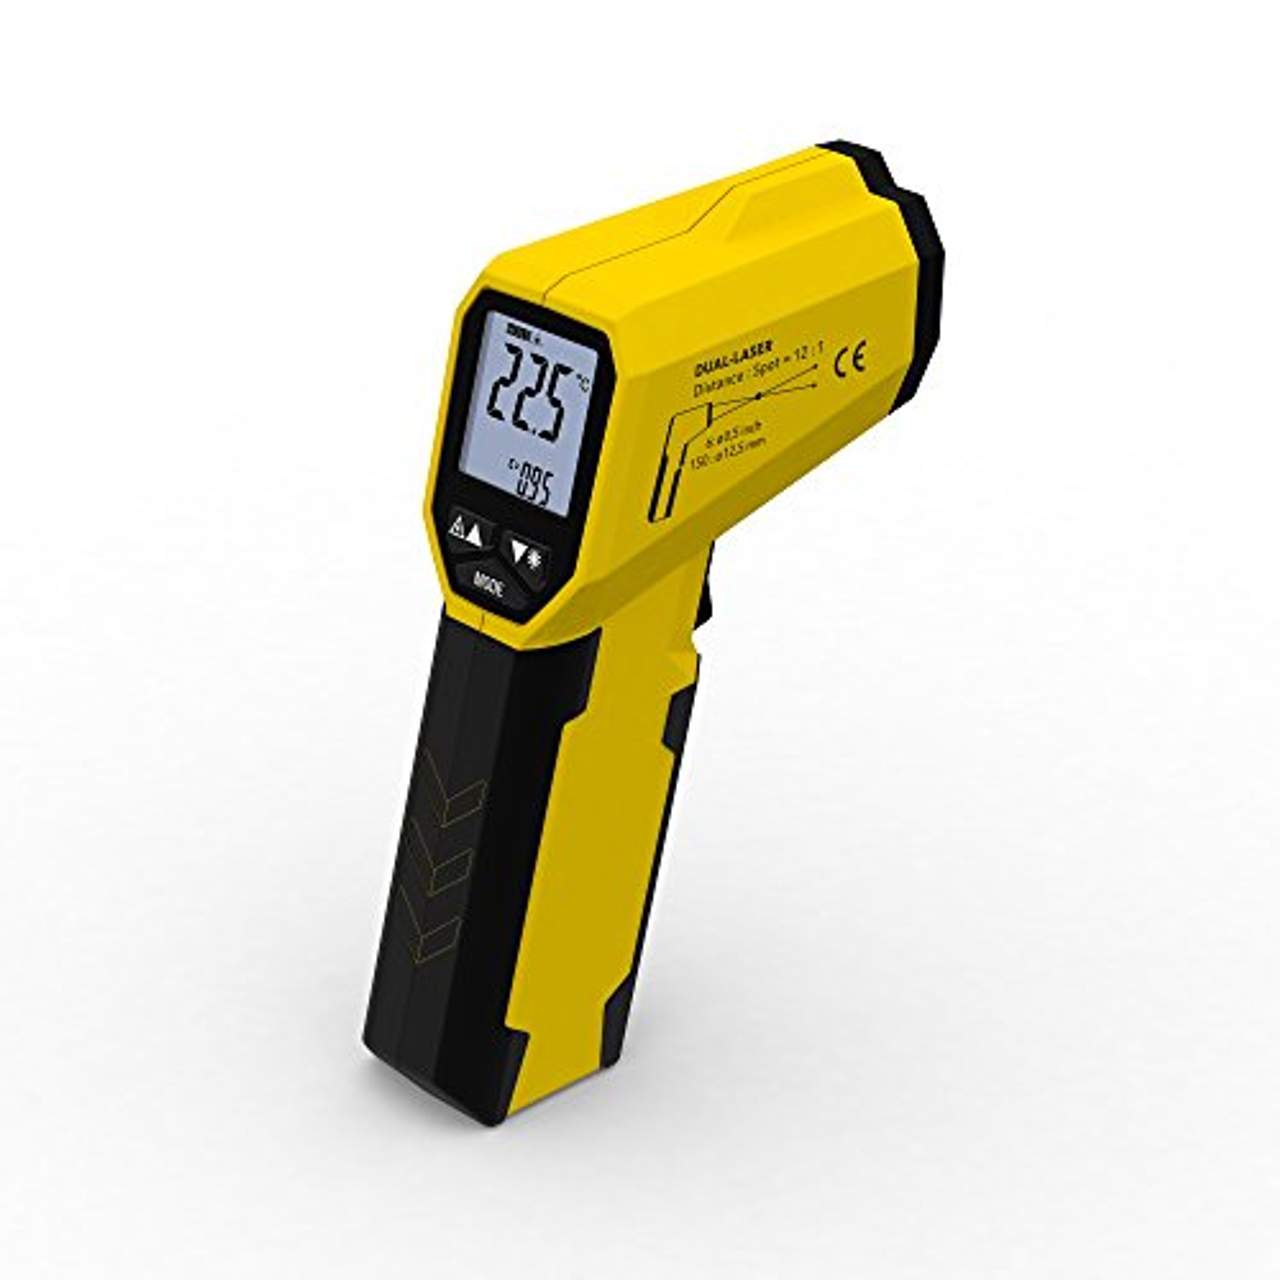 TROTEC BP21 Infrarot Thermometer